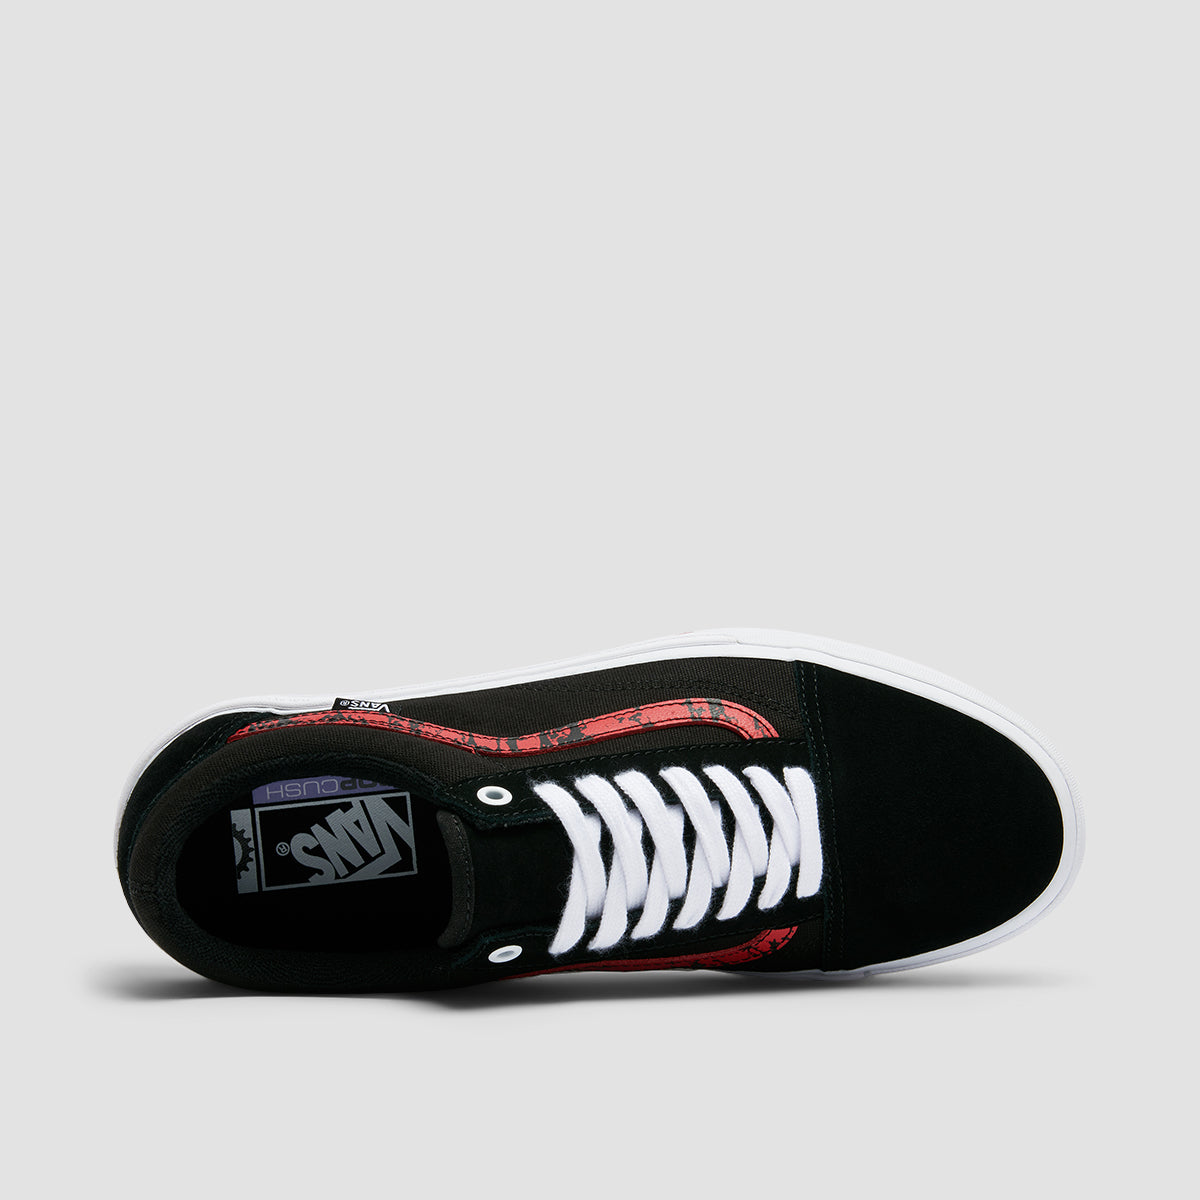 Vans BMX Old Skool Shoes - Marble Black/White/Red